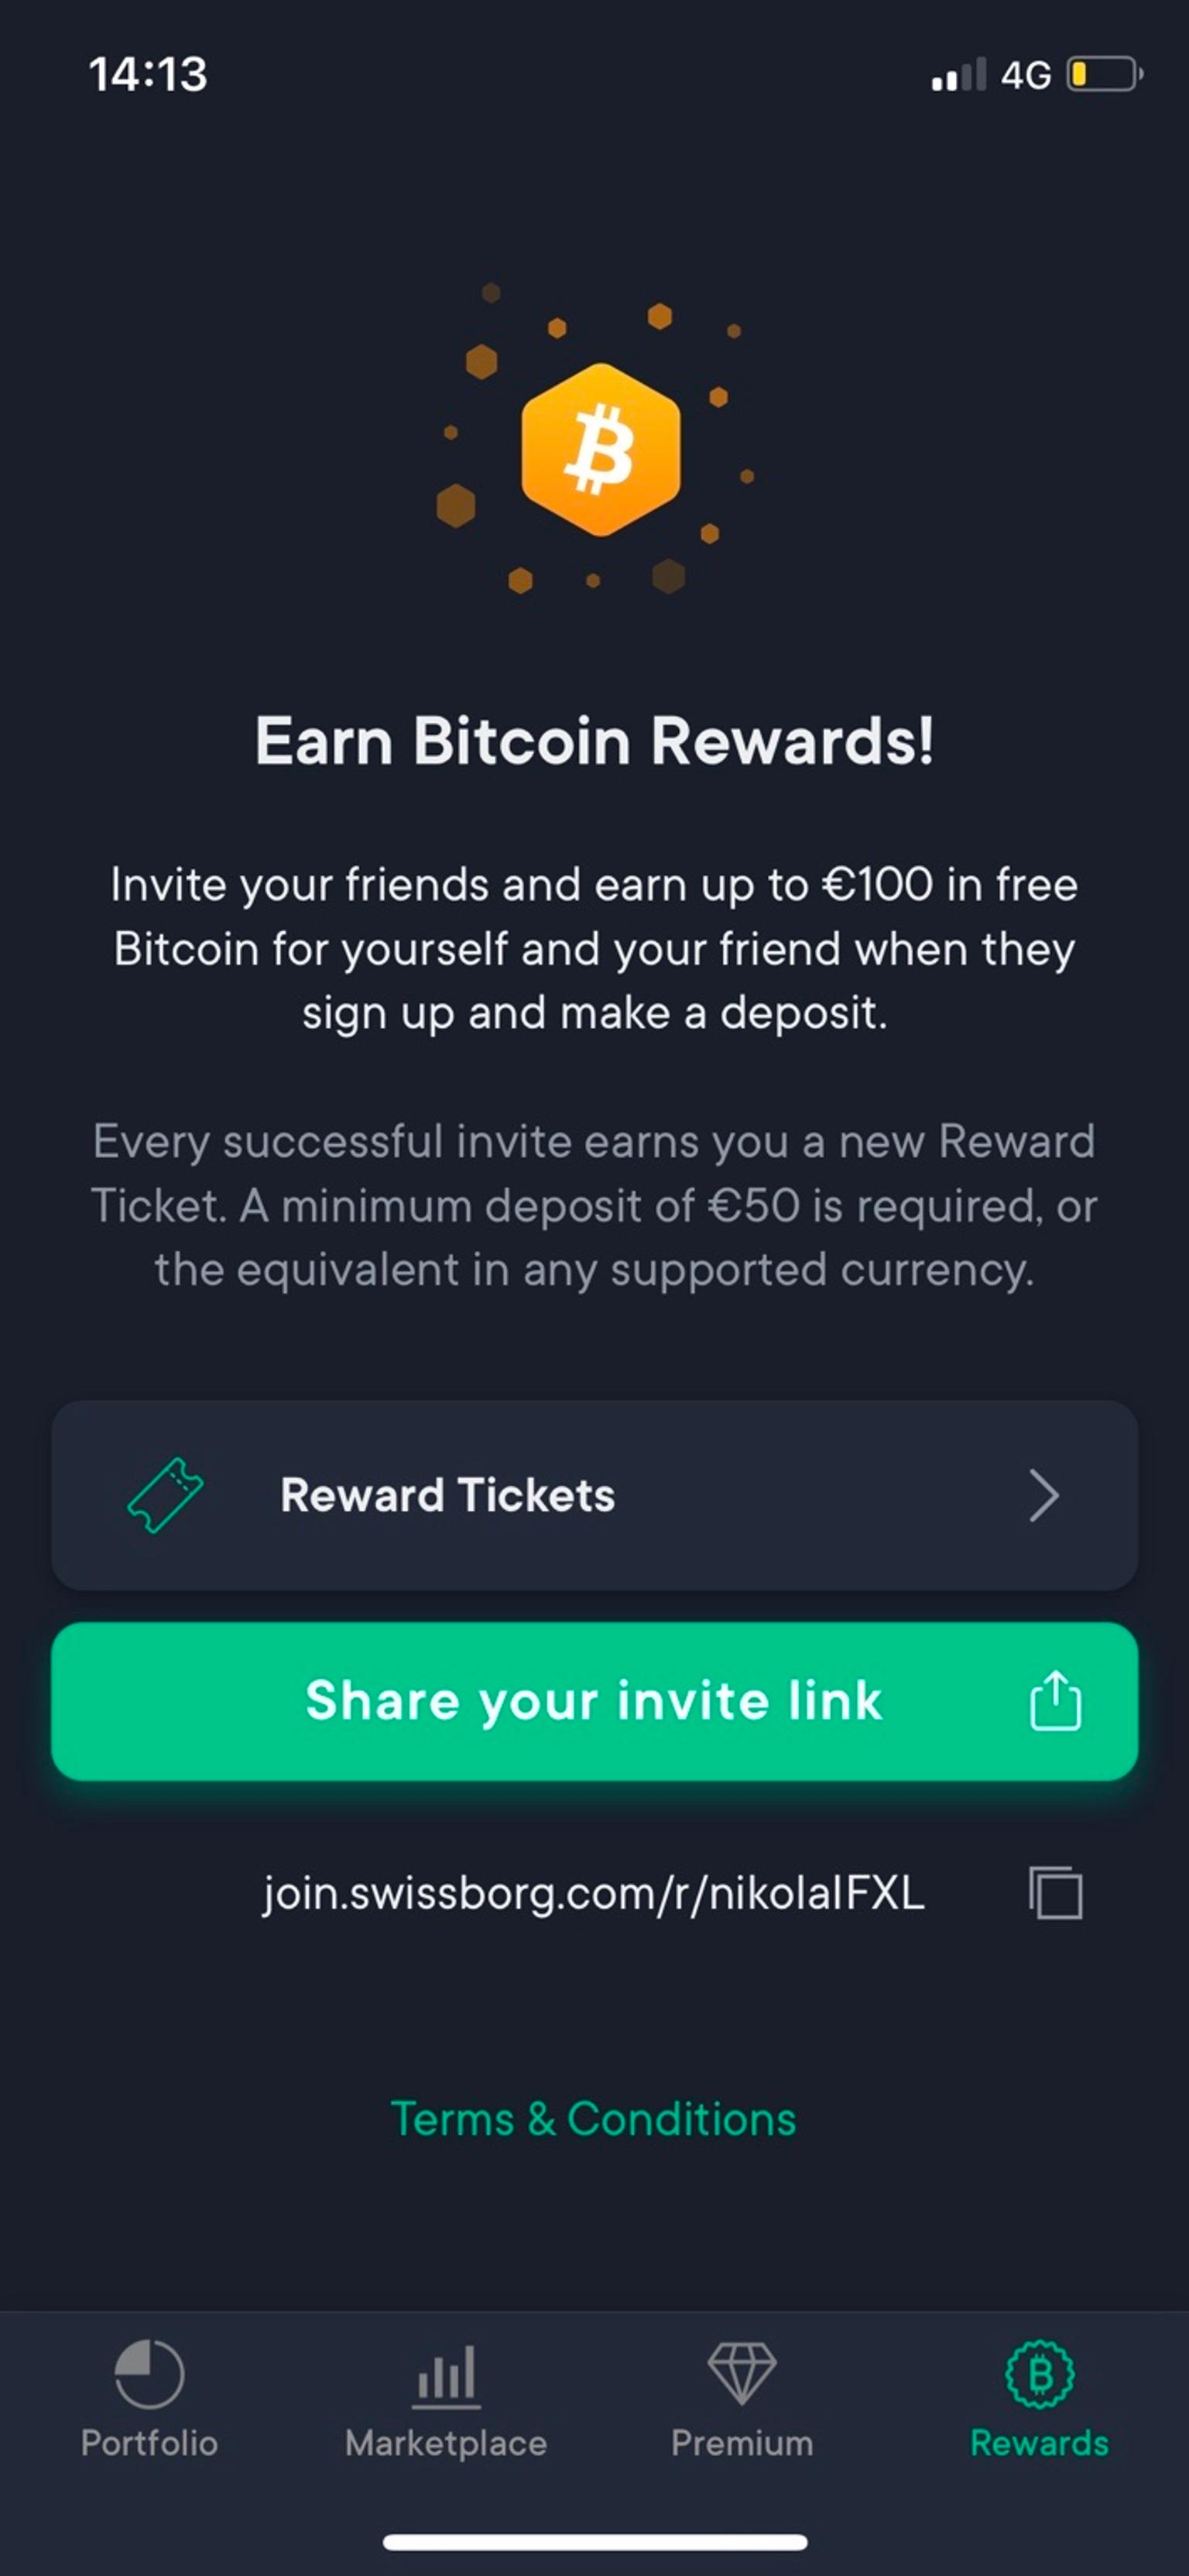 100 free bitcoins